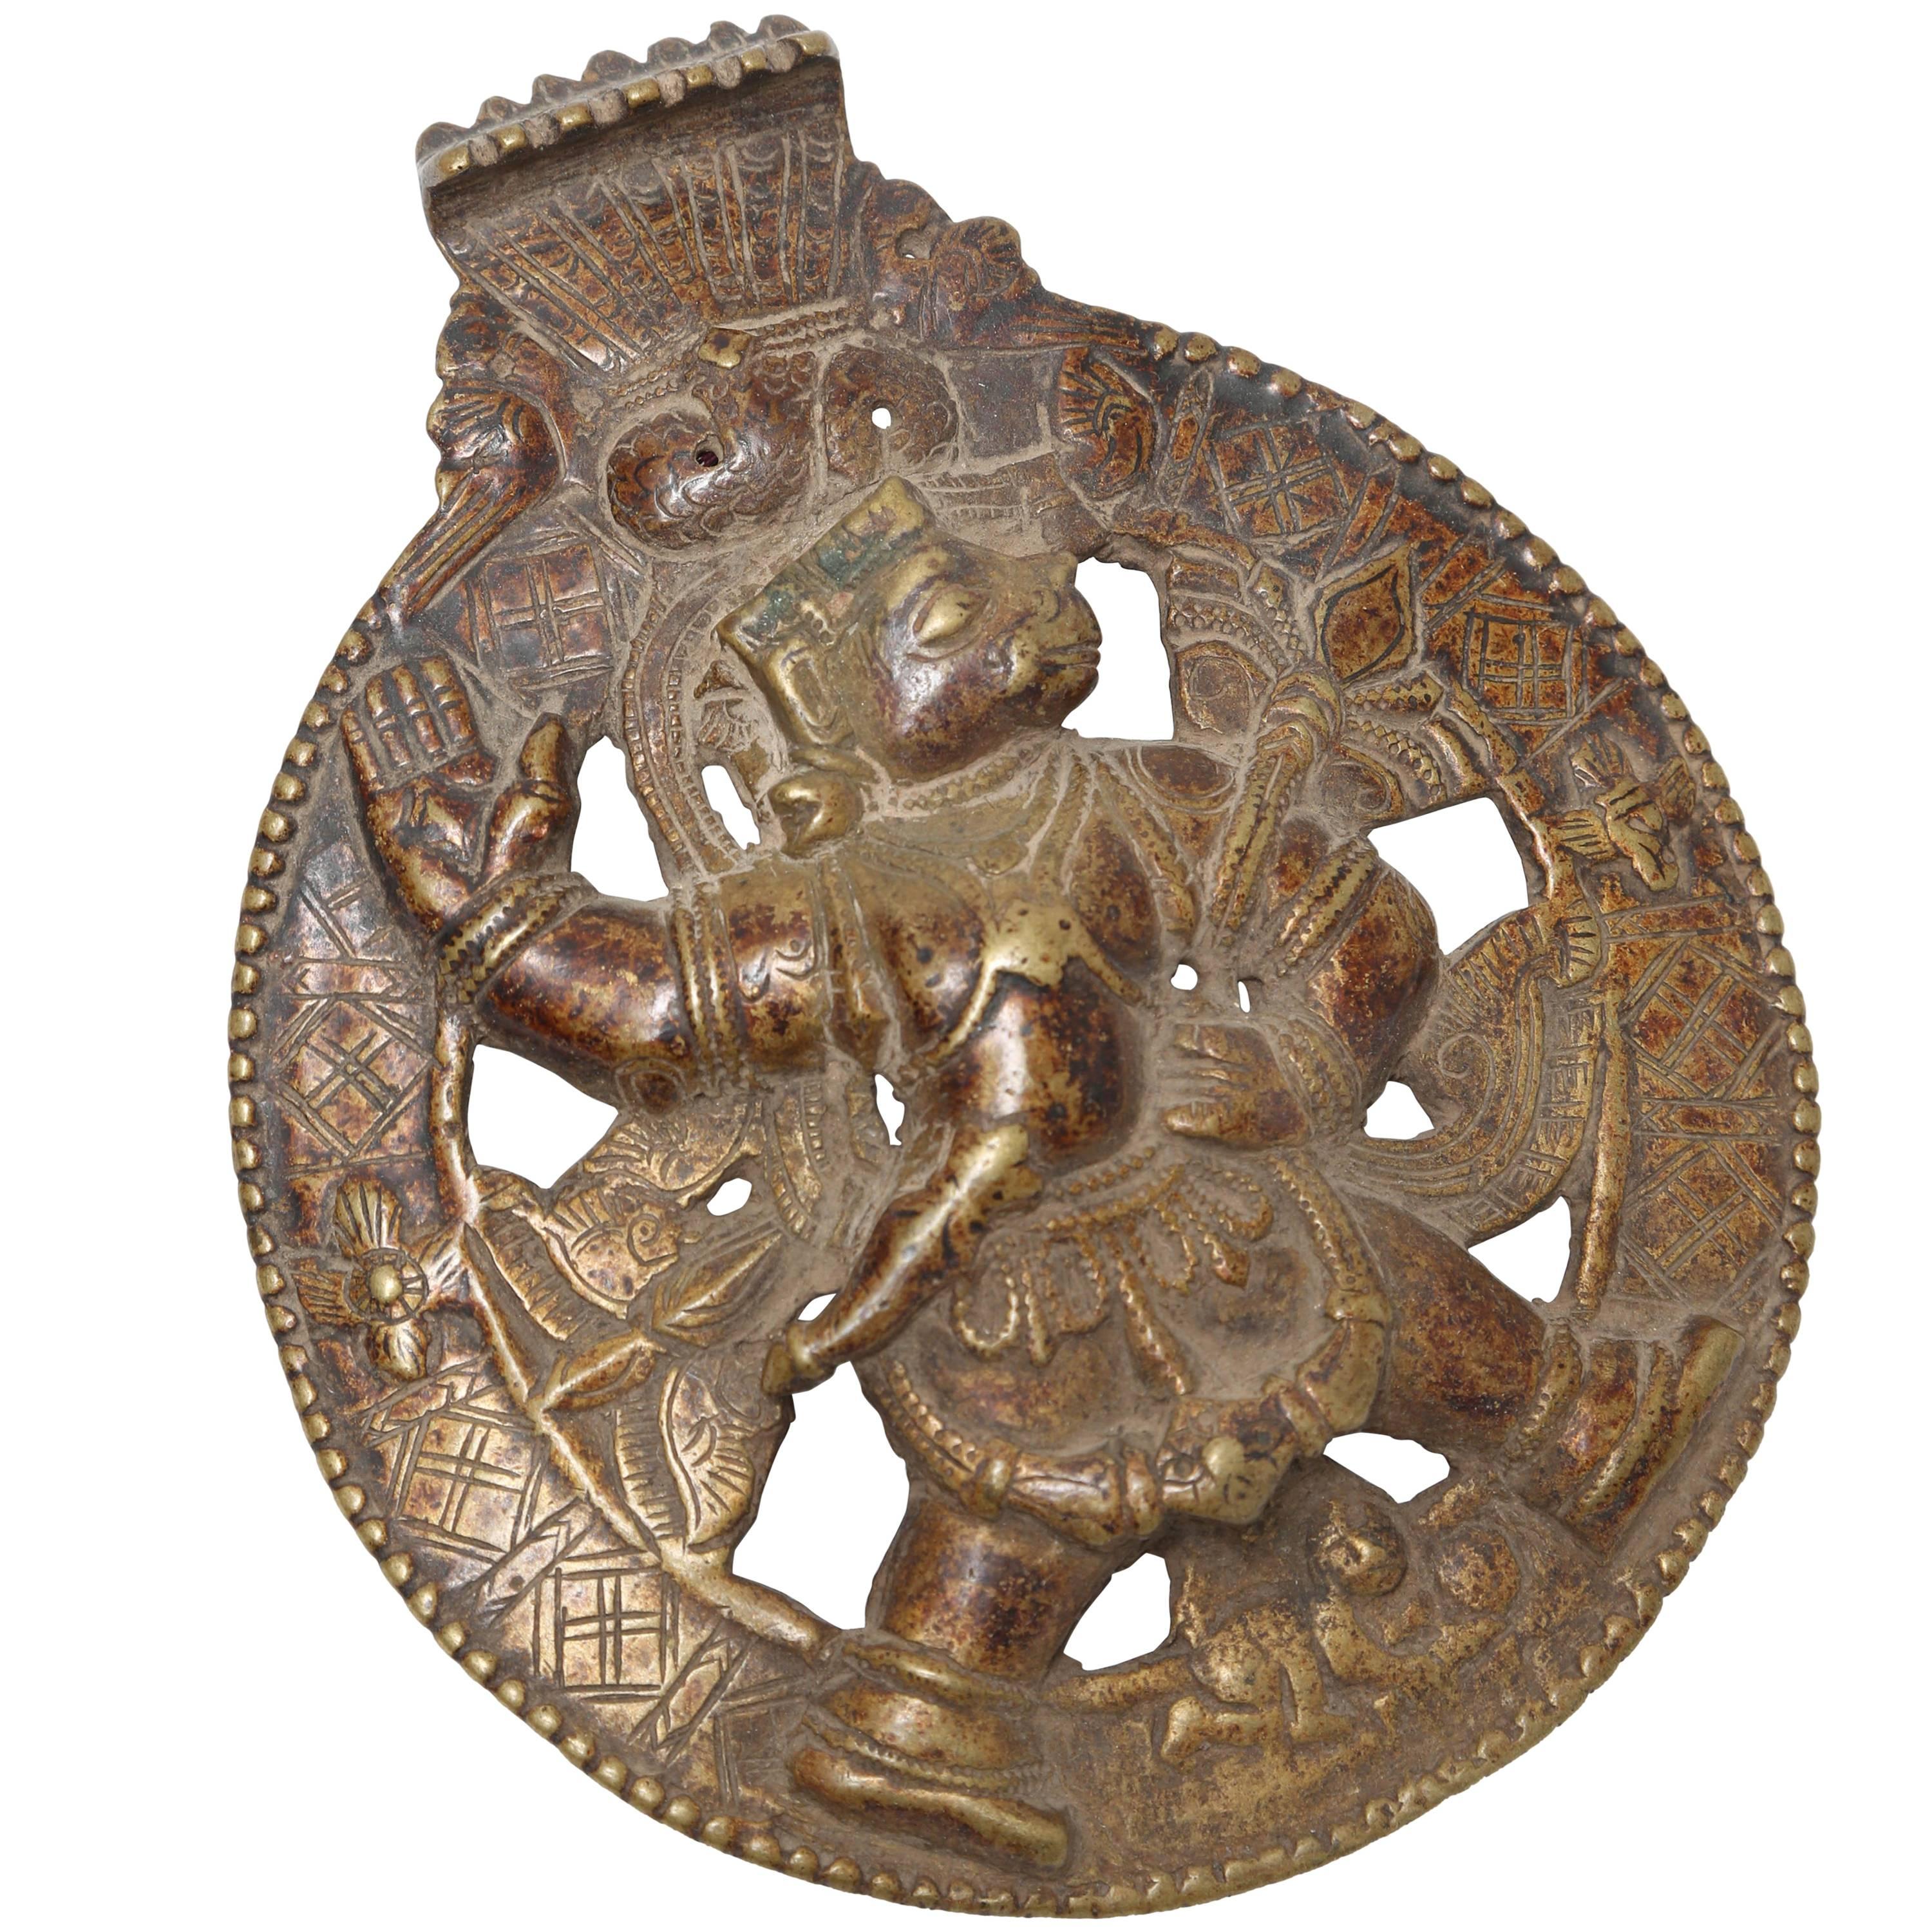 Bronze and Copper Alloy Roundel of Hanuman, the Hindu Monkey God